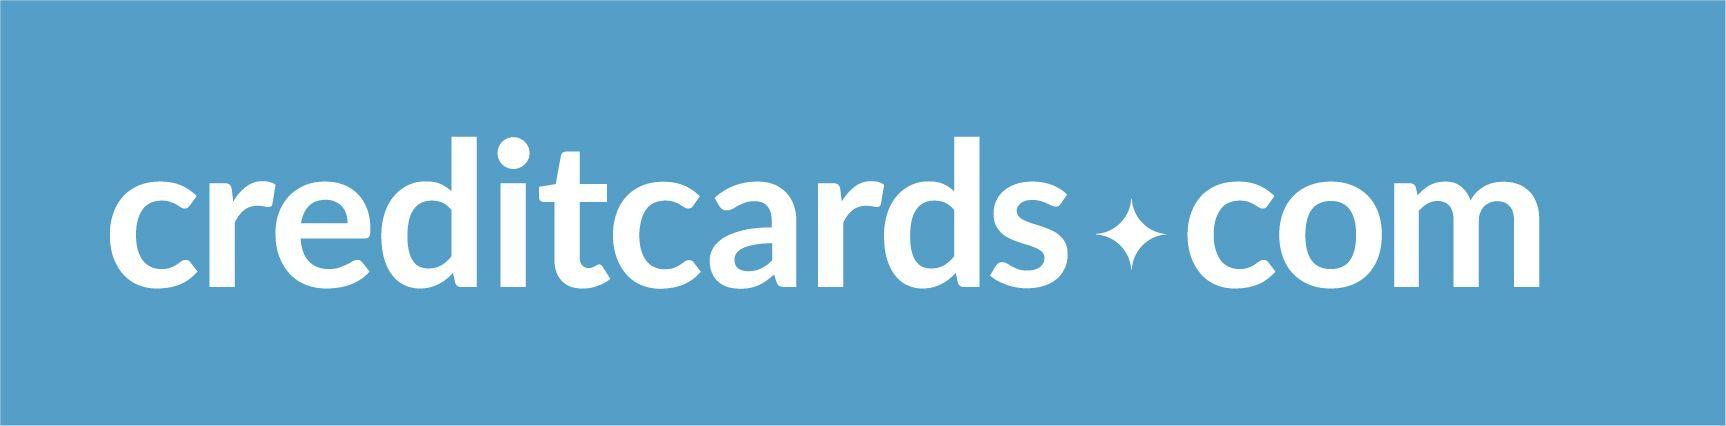 Creditcards.com Logo - Creditcards.com consults with Michael Foguth –